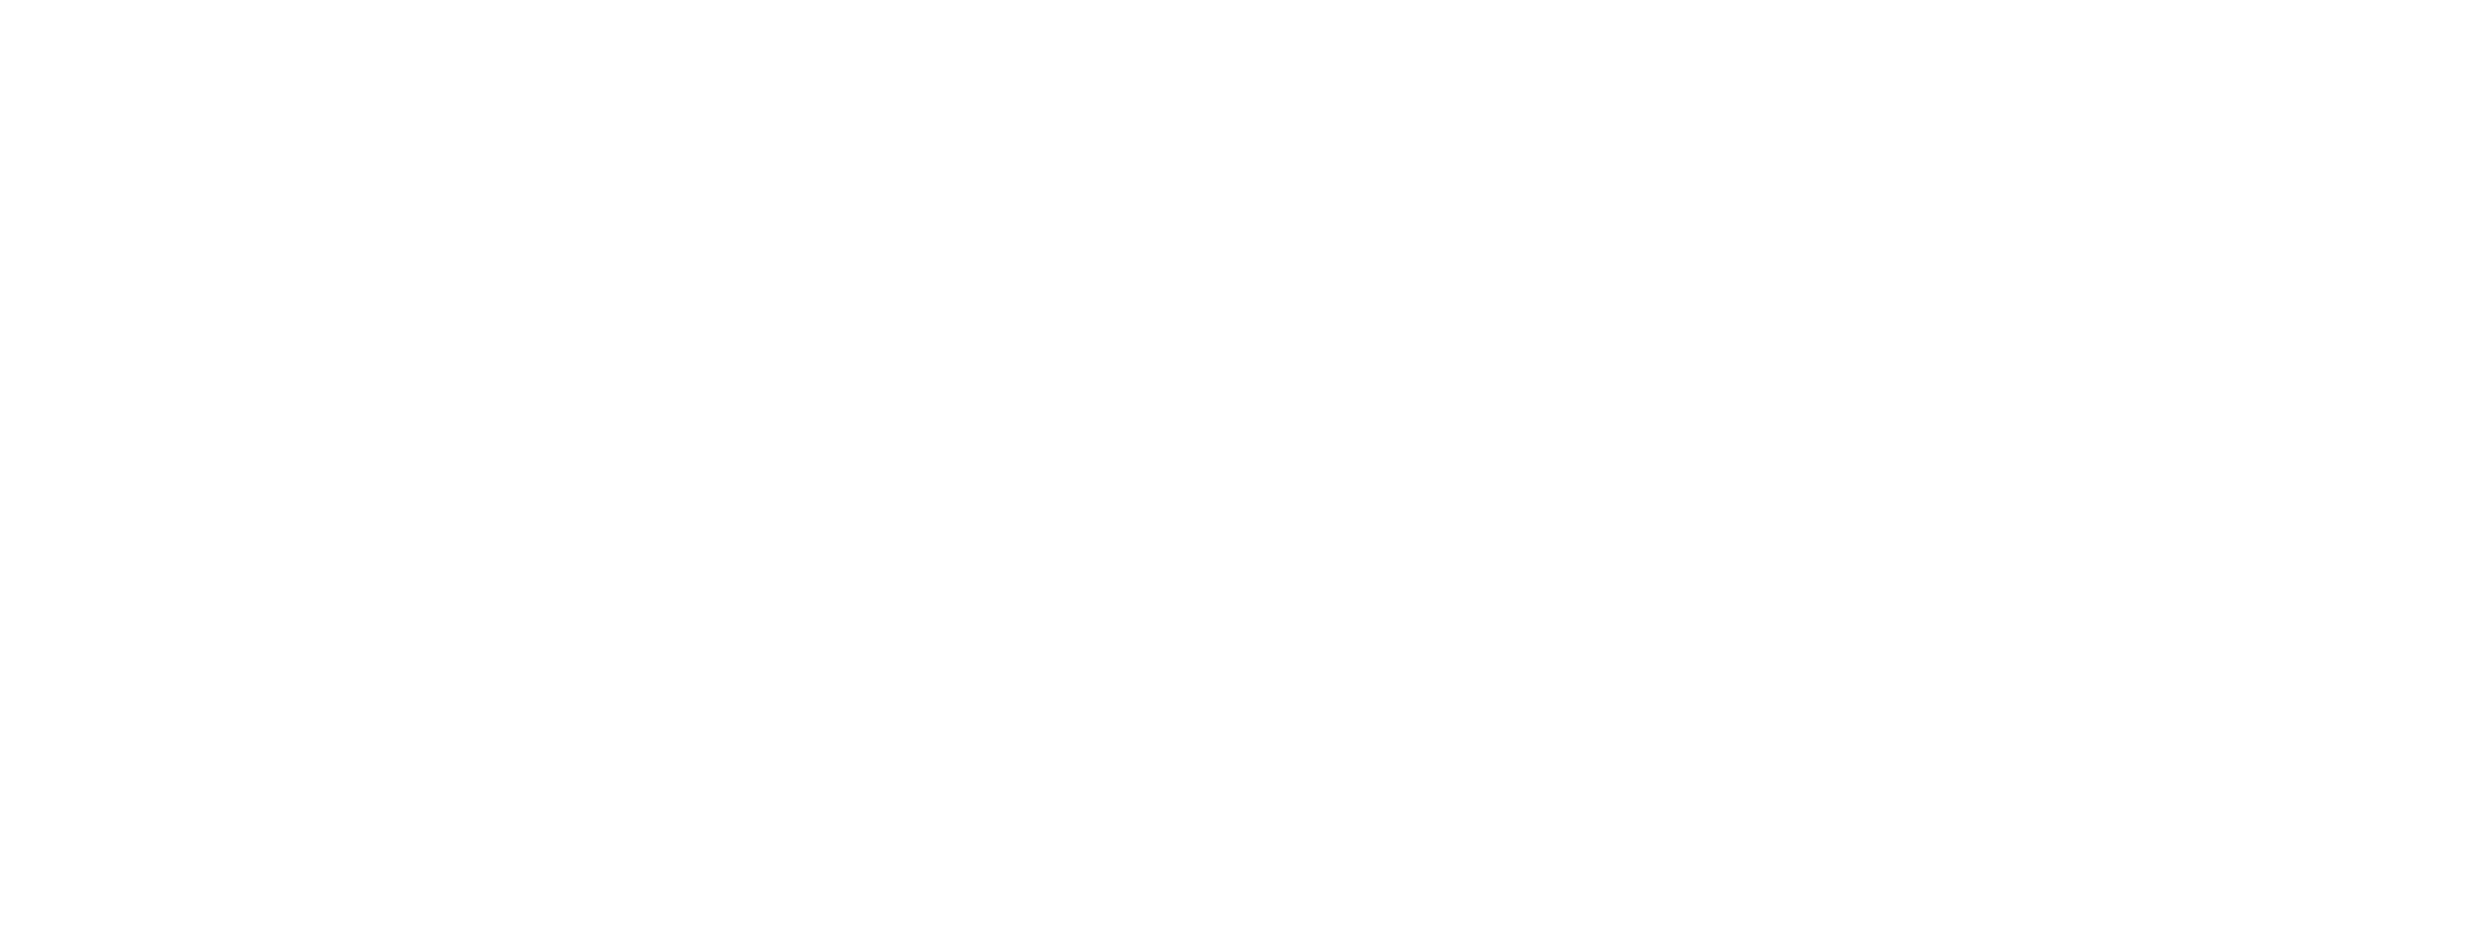 Bubu Jungle Resort